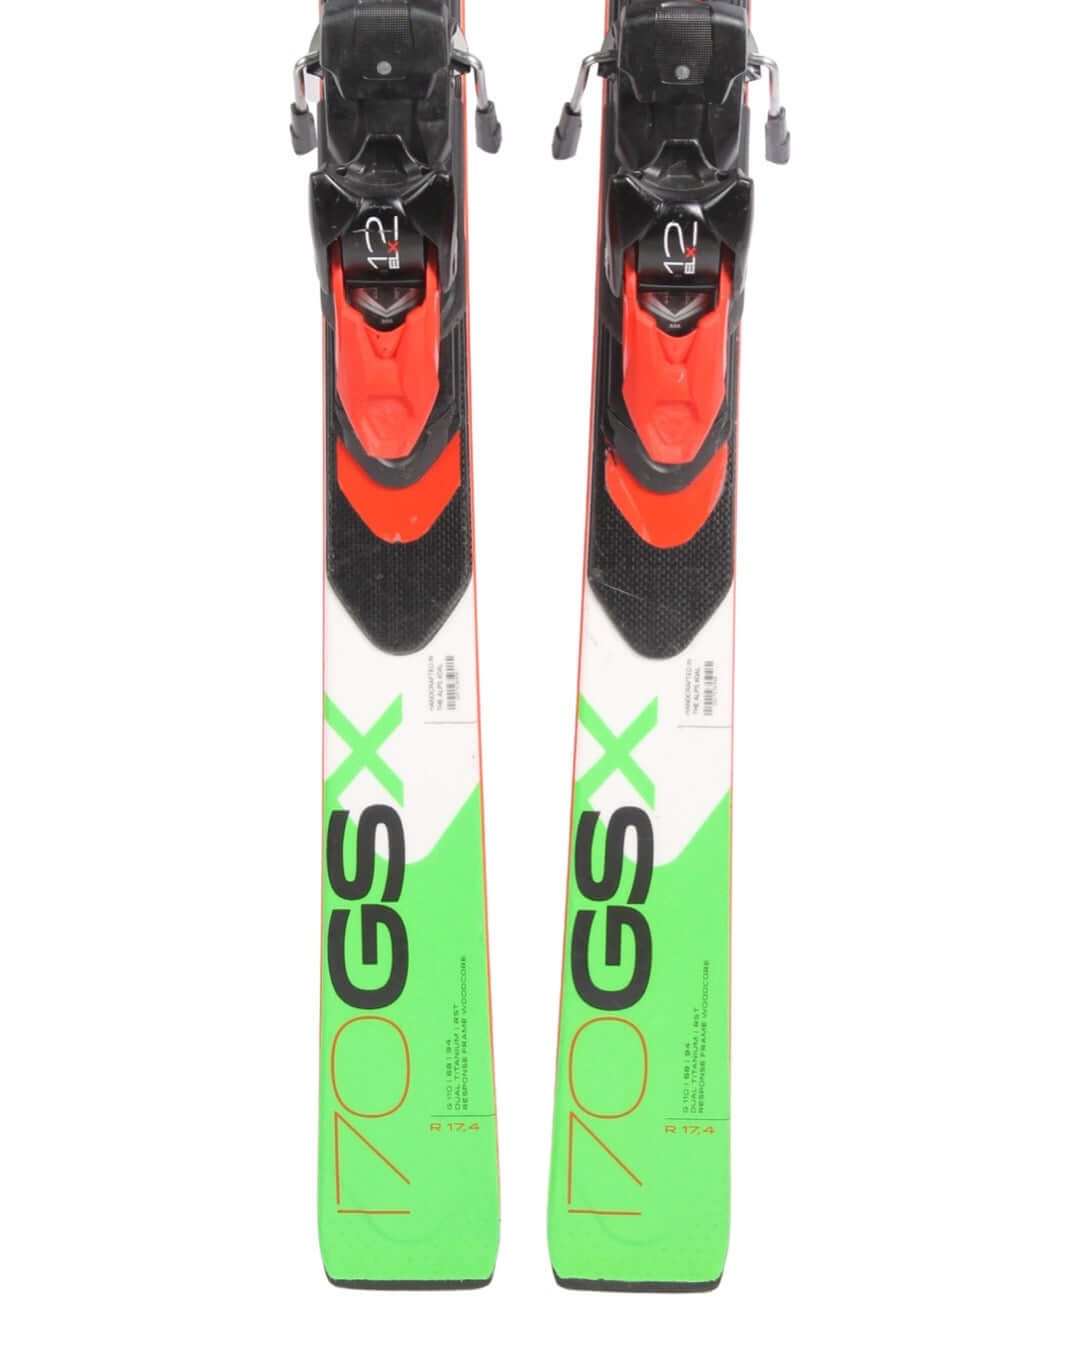 Ski - Elan GSX Race - 2599 kr